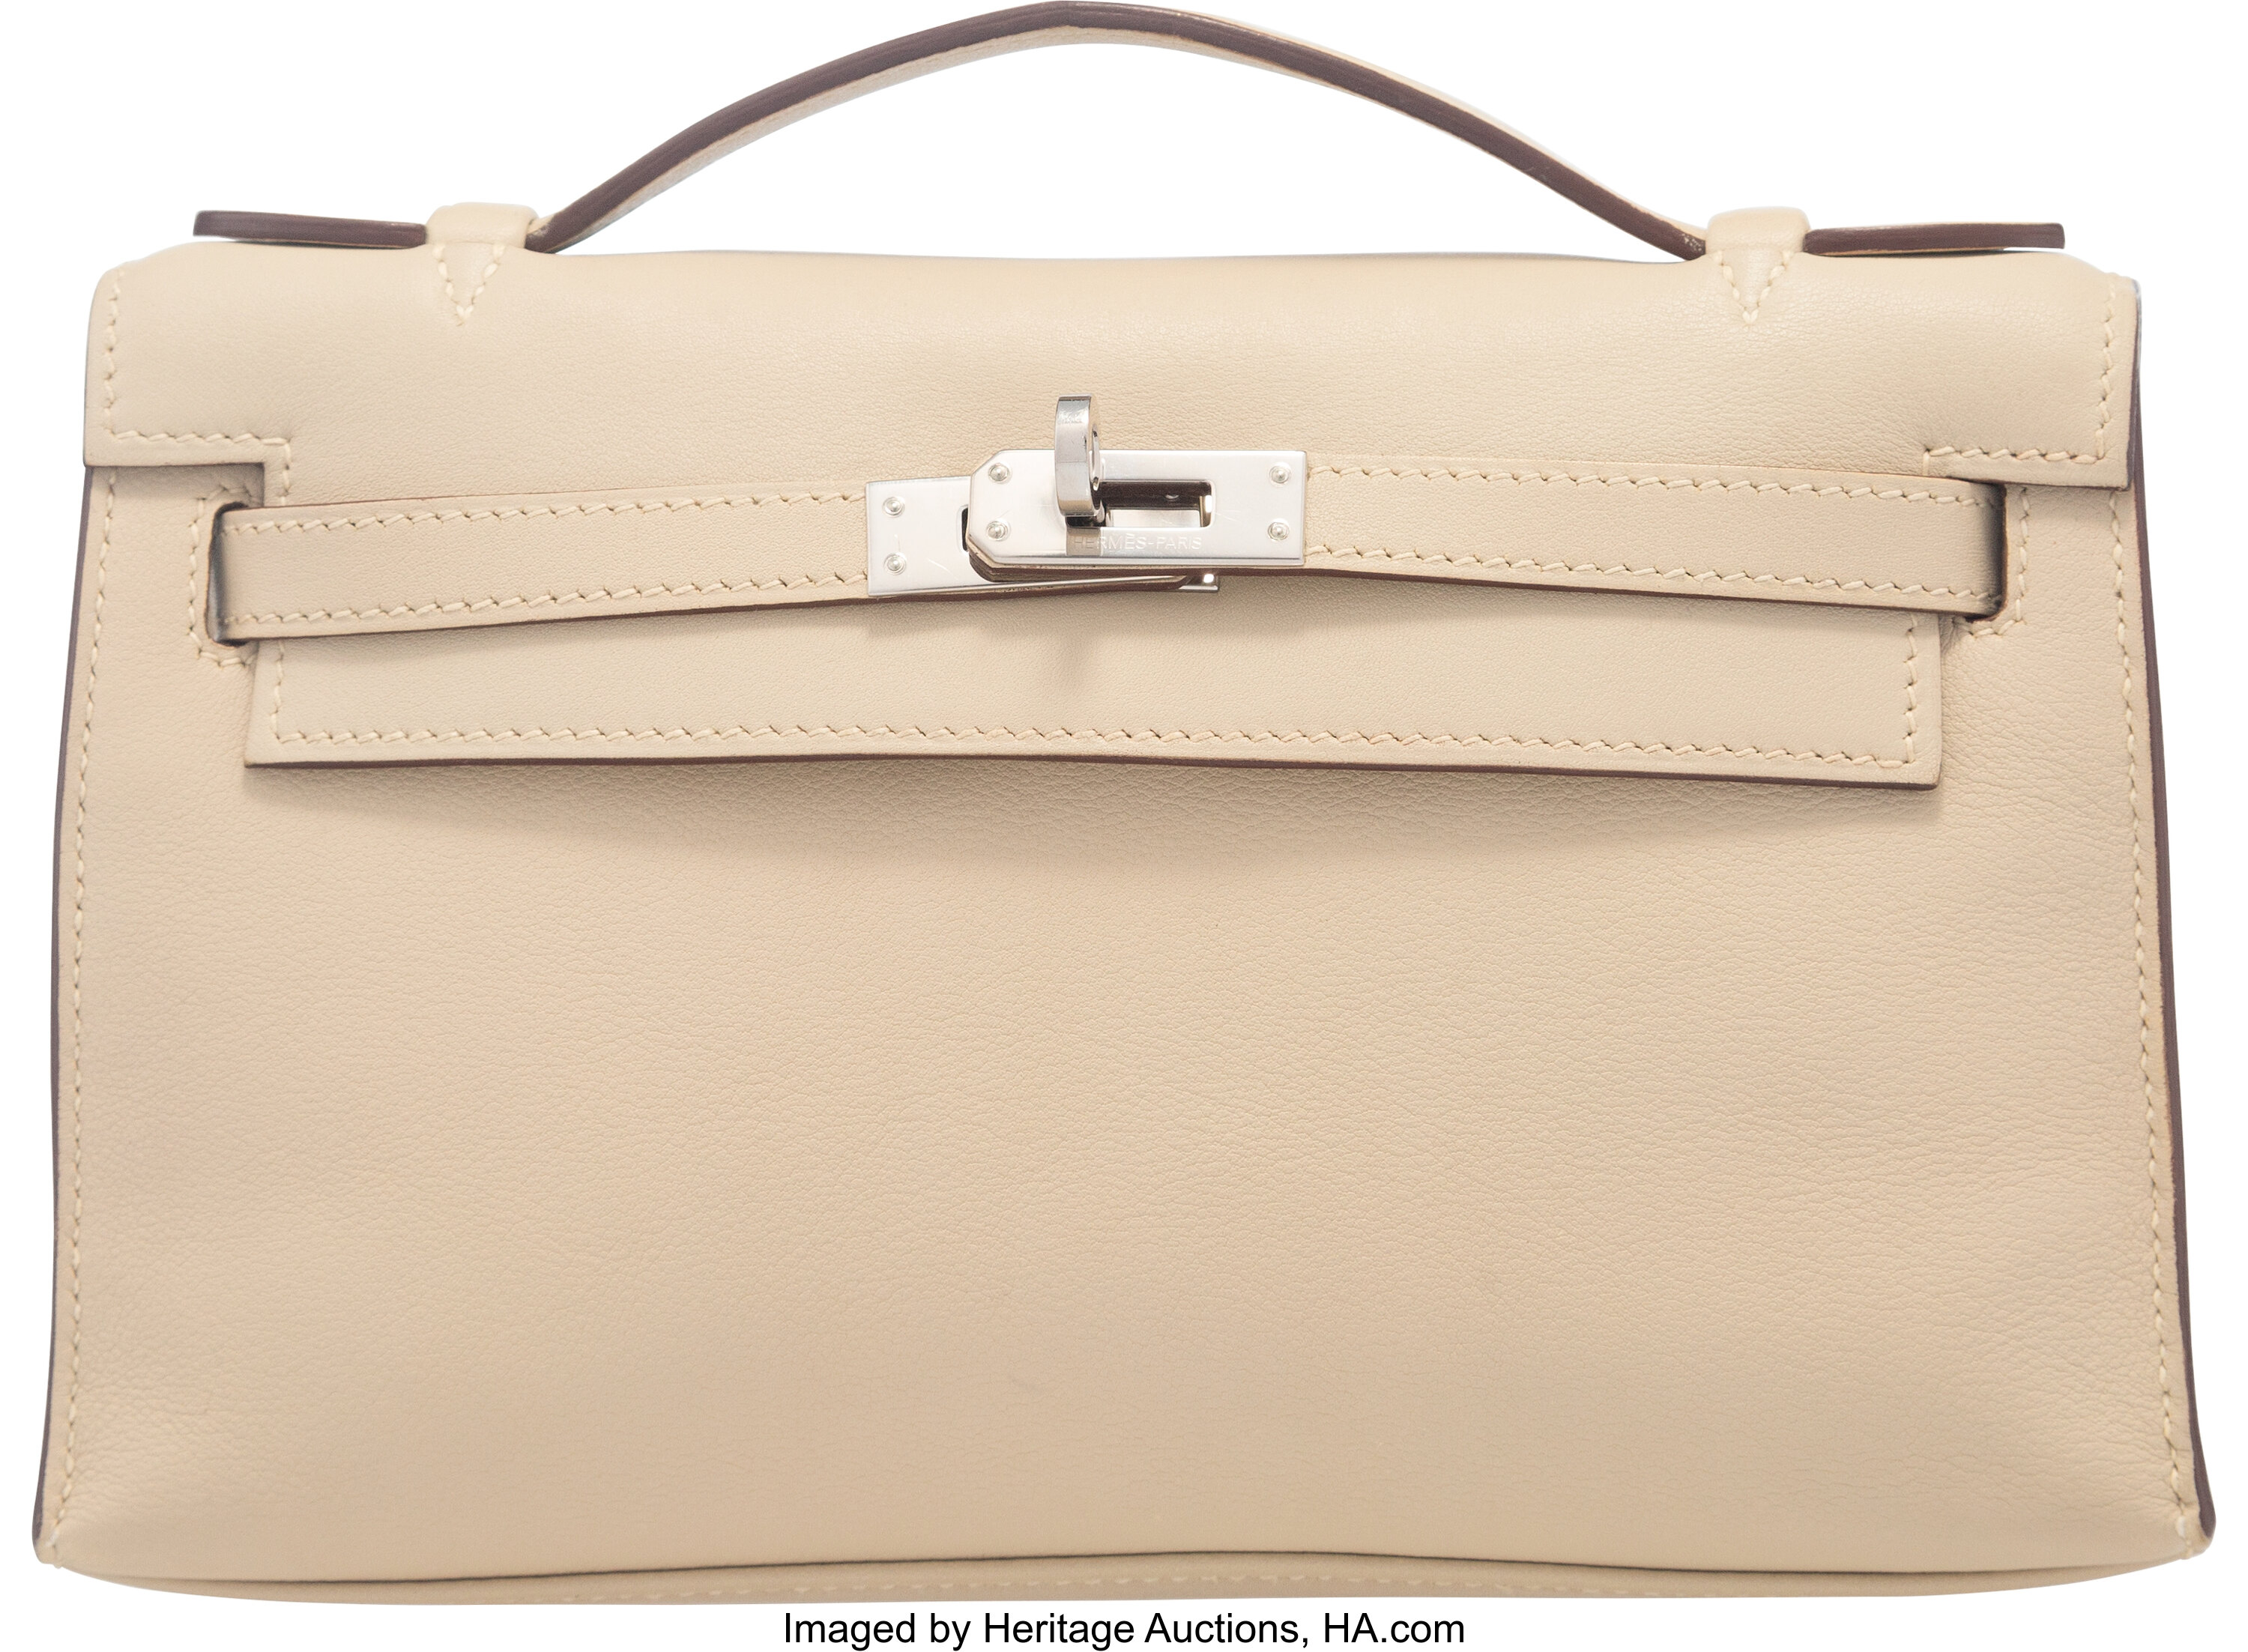 Parchemin leather and palladium hardware handbag, Kelly Danse, Hermès, 2007, Hermès Handbags & Accessories Online, Jewellery